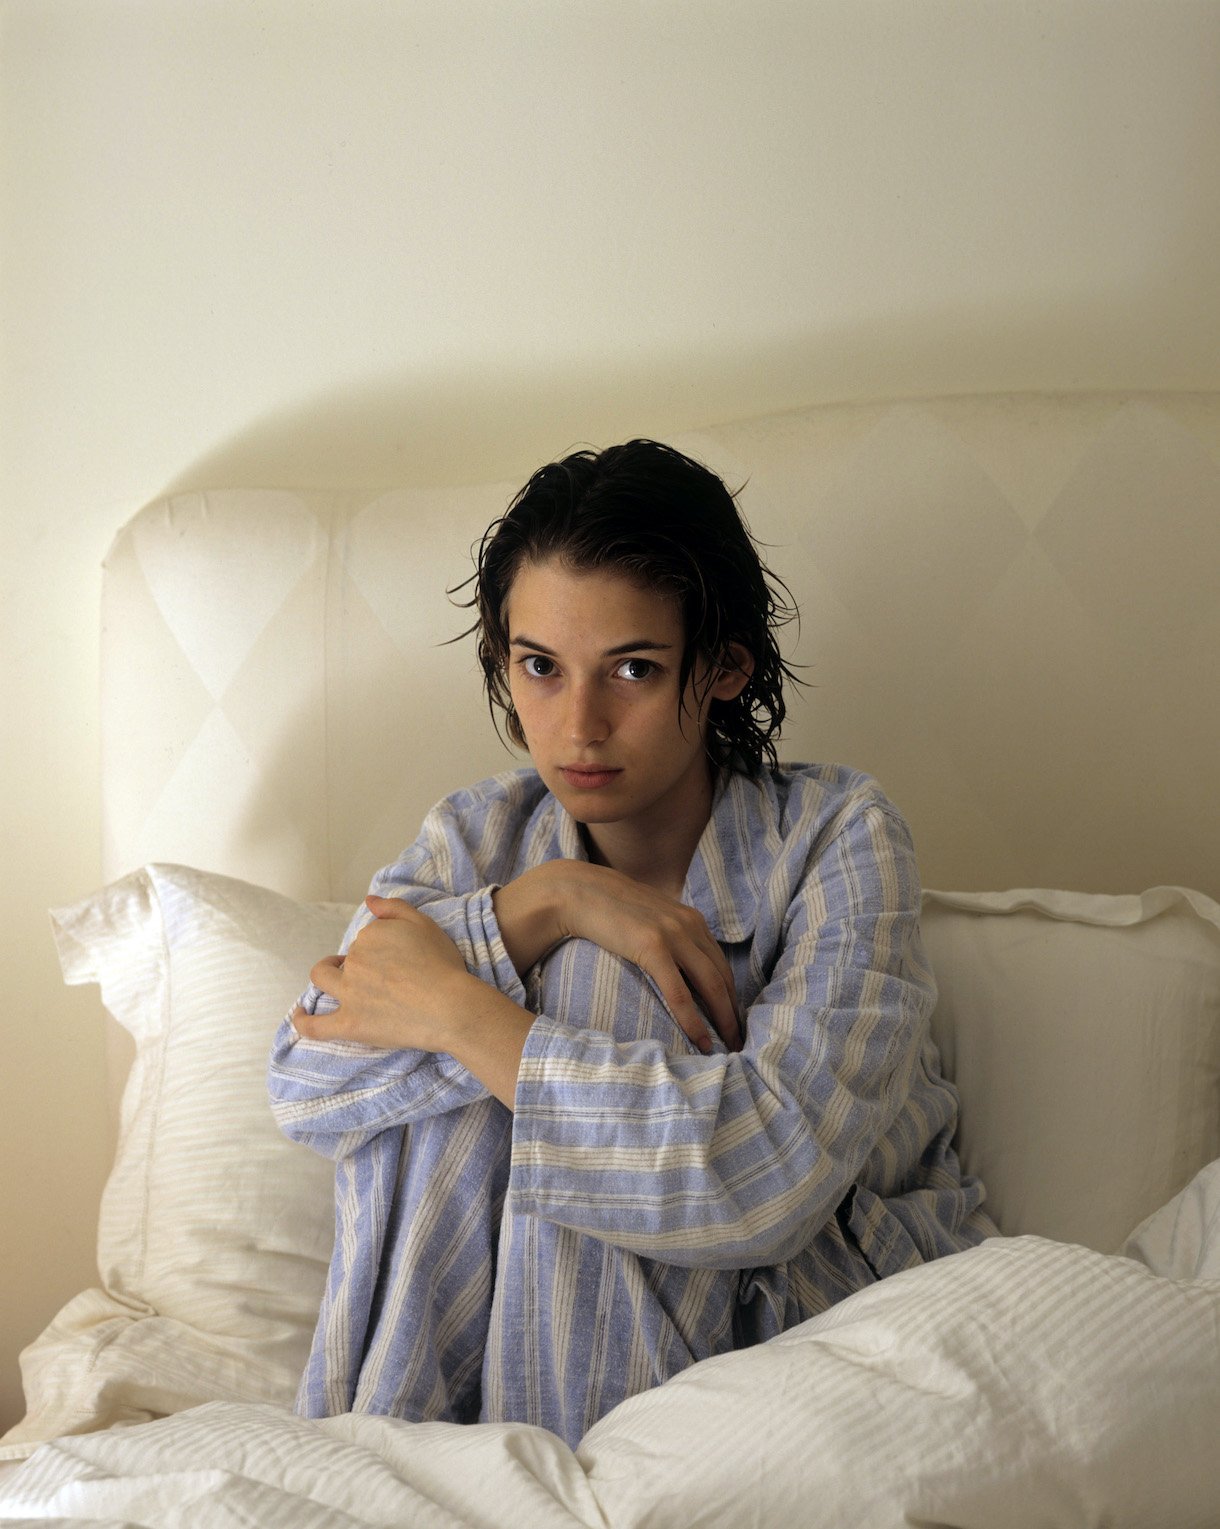 Winona Ryder in her 20s, wearing pajamas